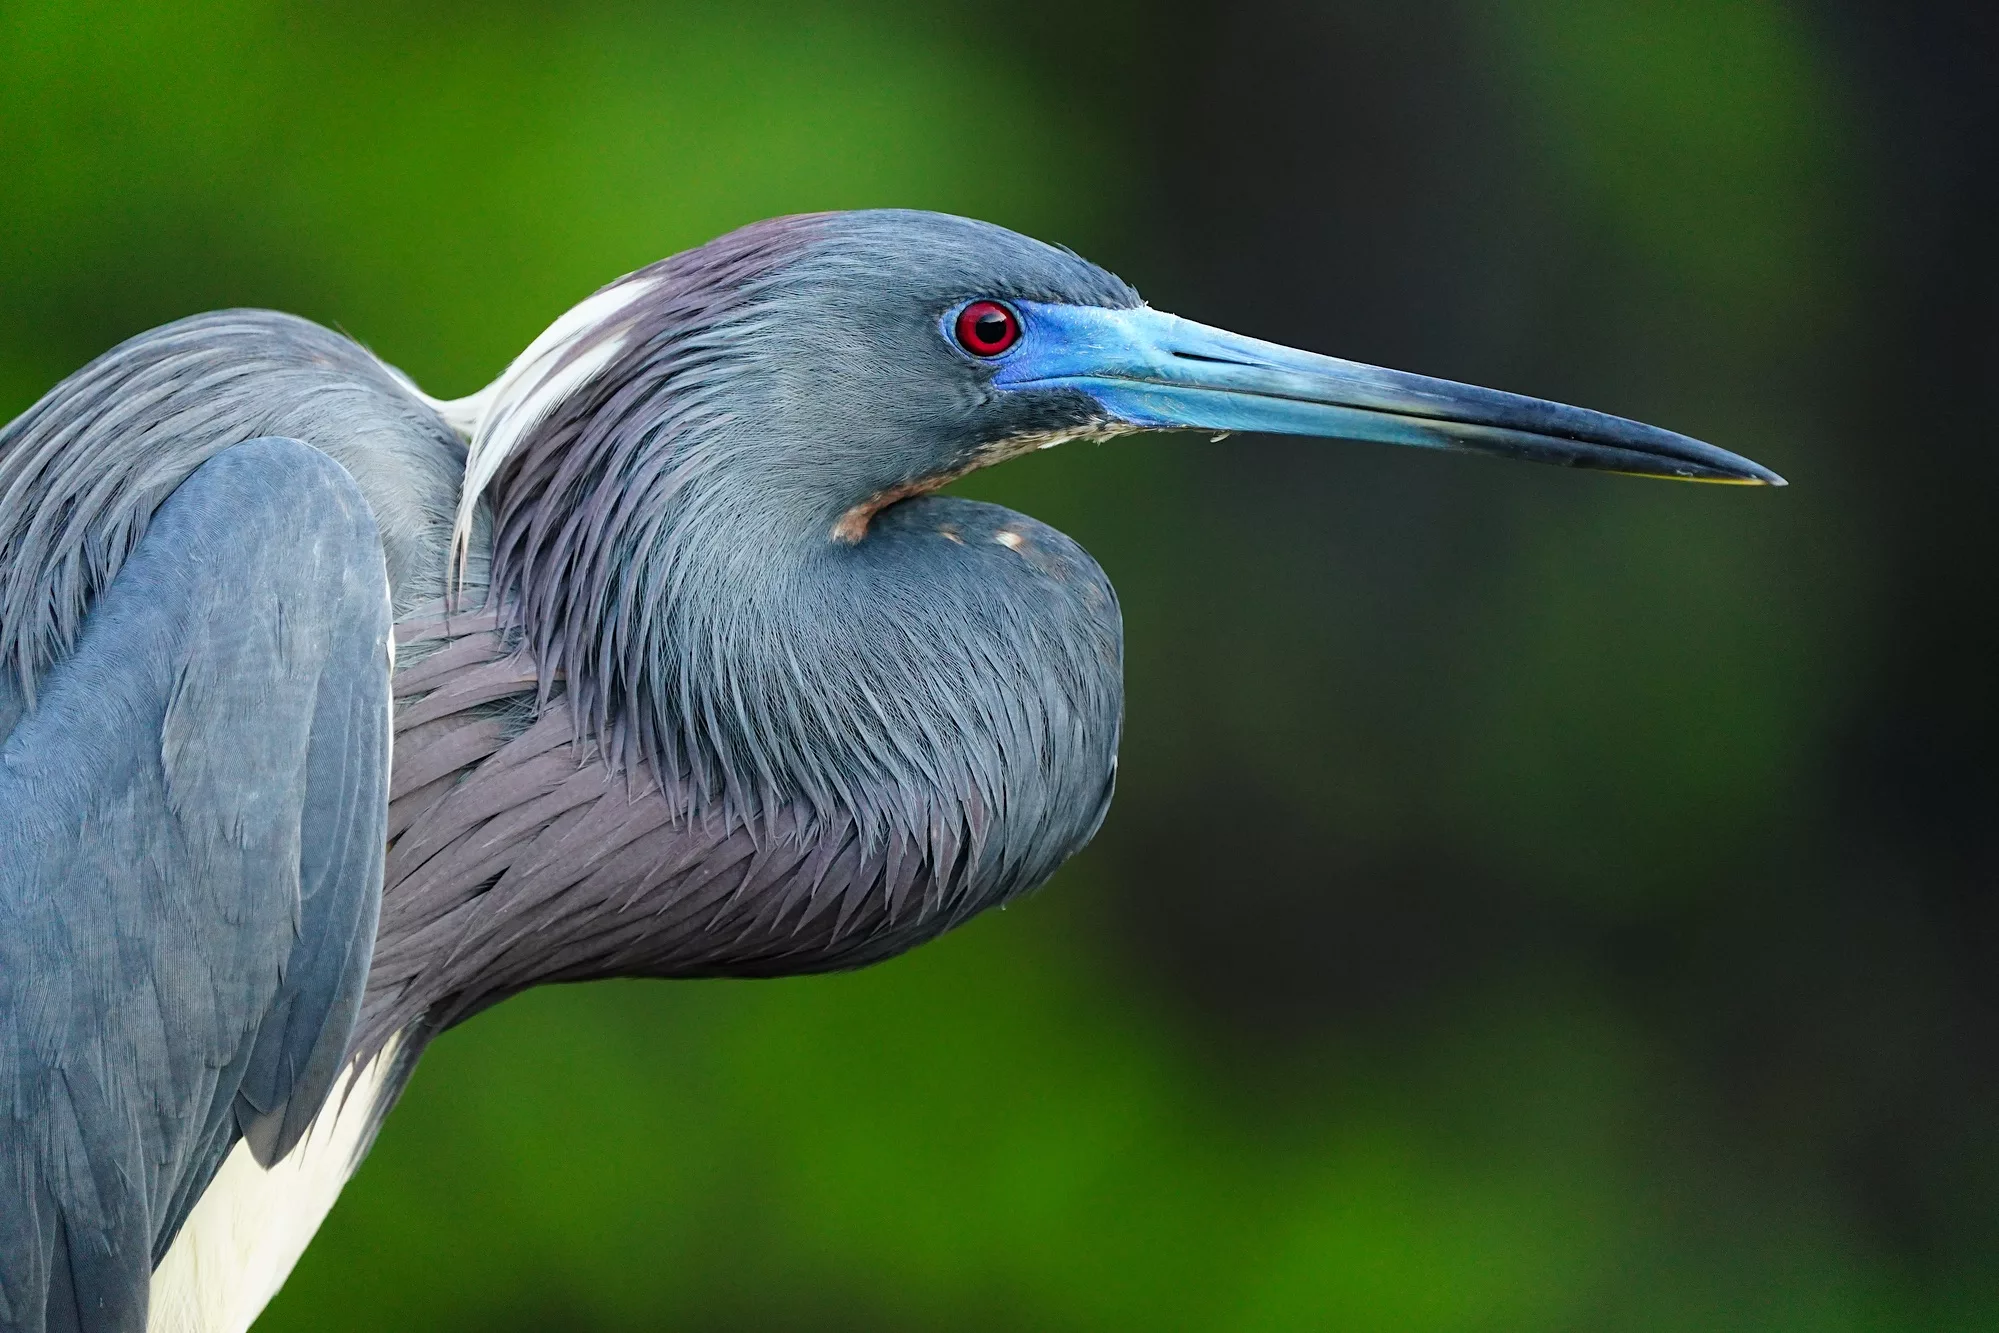 Florida birds photo tour with Don Mammoser - Tri-colored Heron